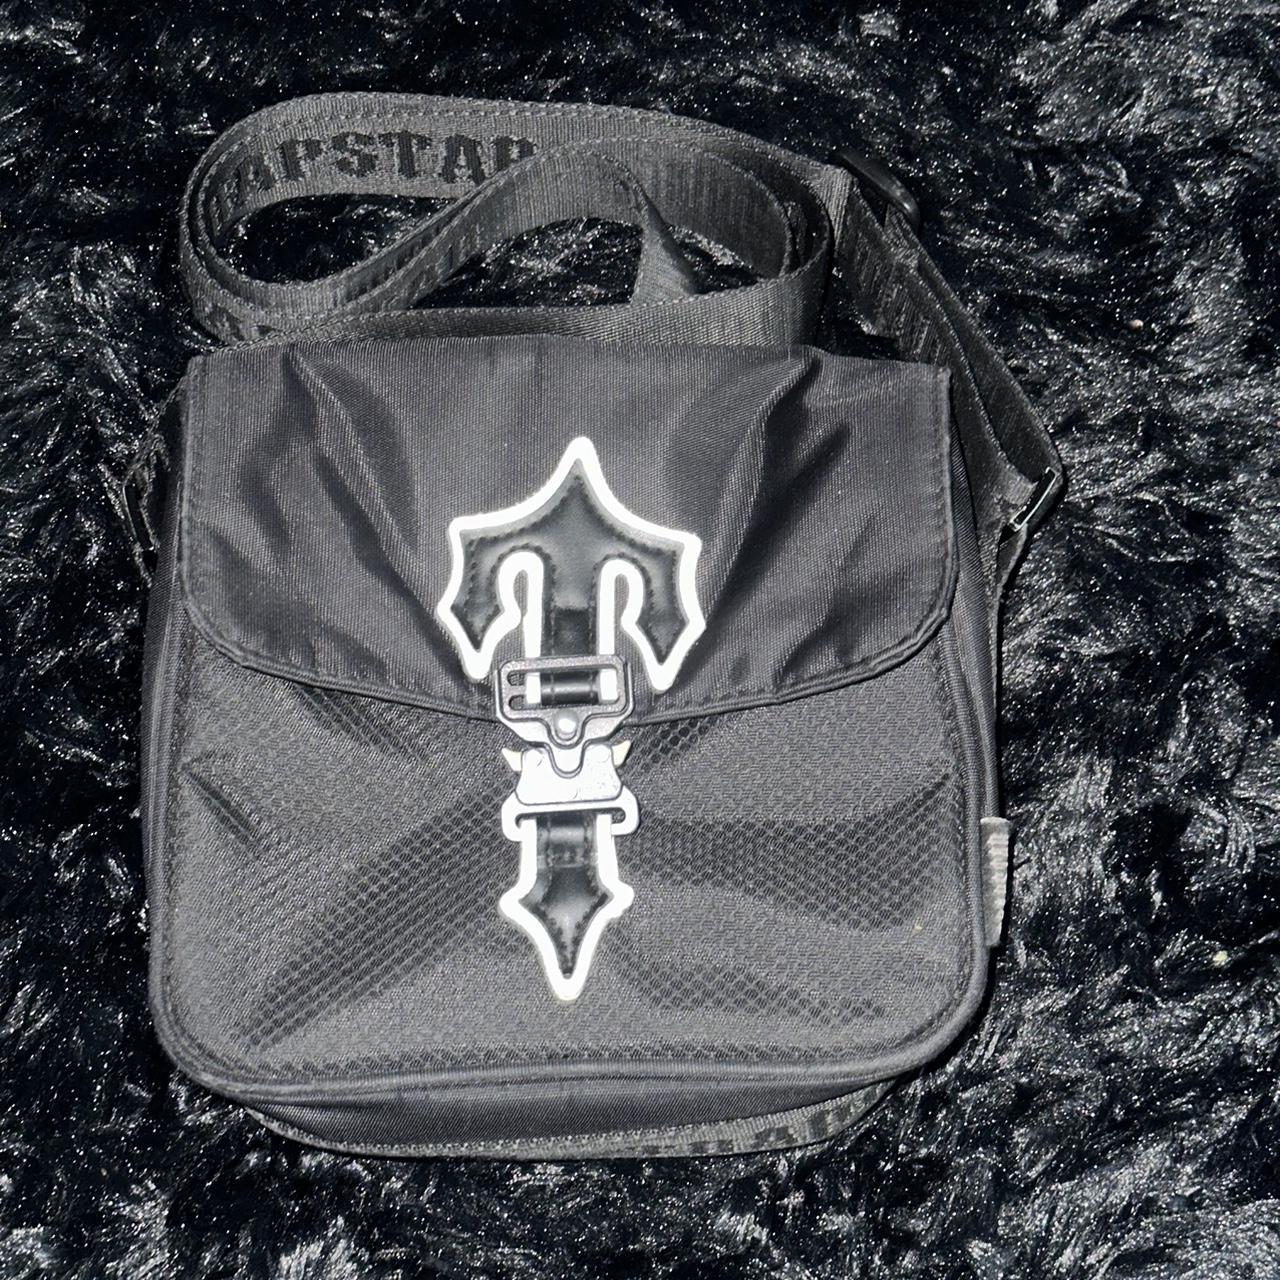 Trapstar Bag 1.0 Irongate Cross Body Reflective Messenger Bag New